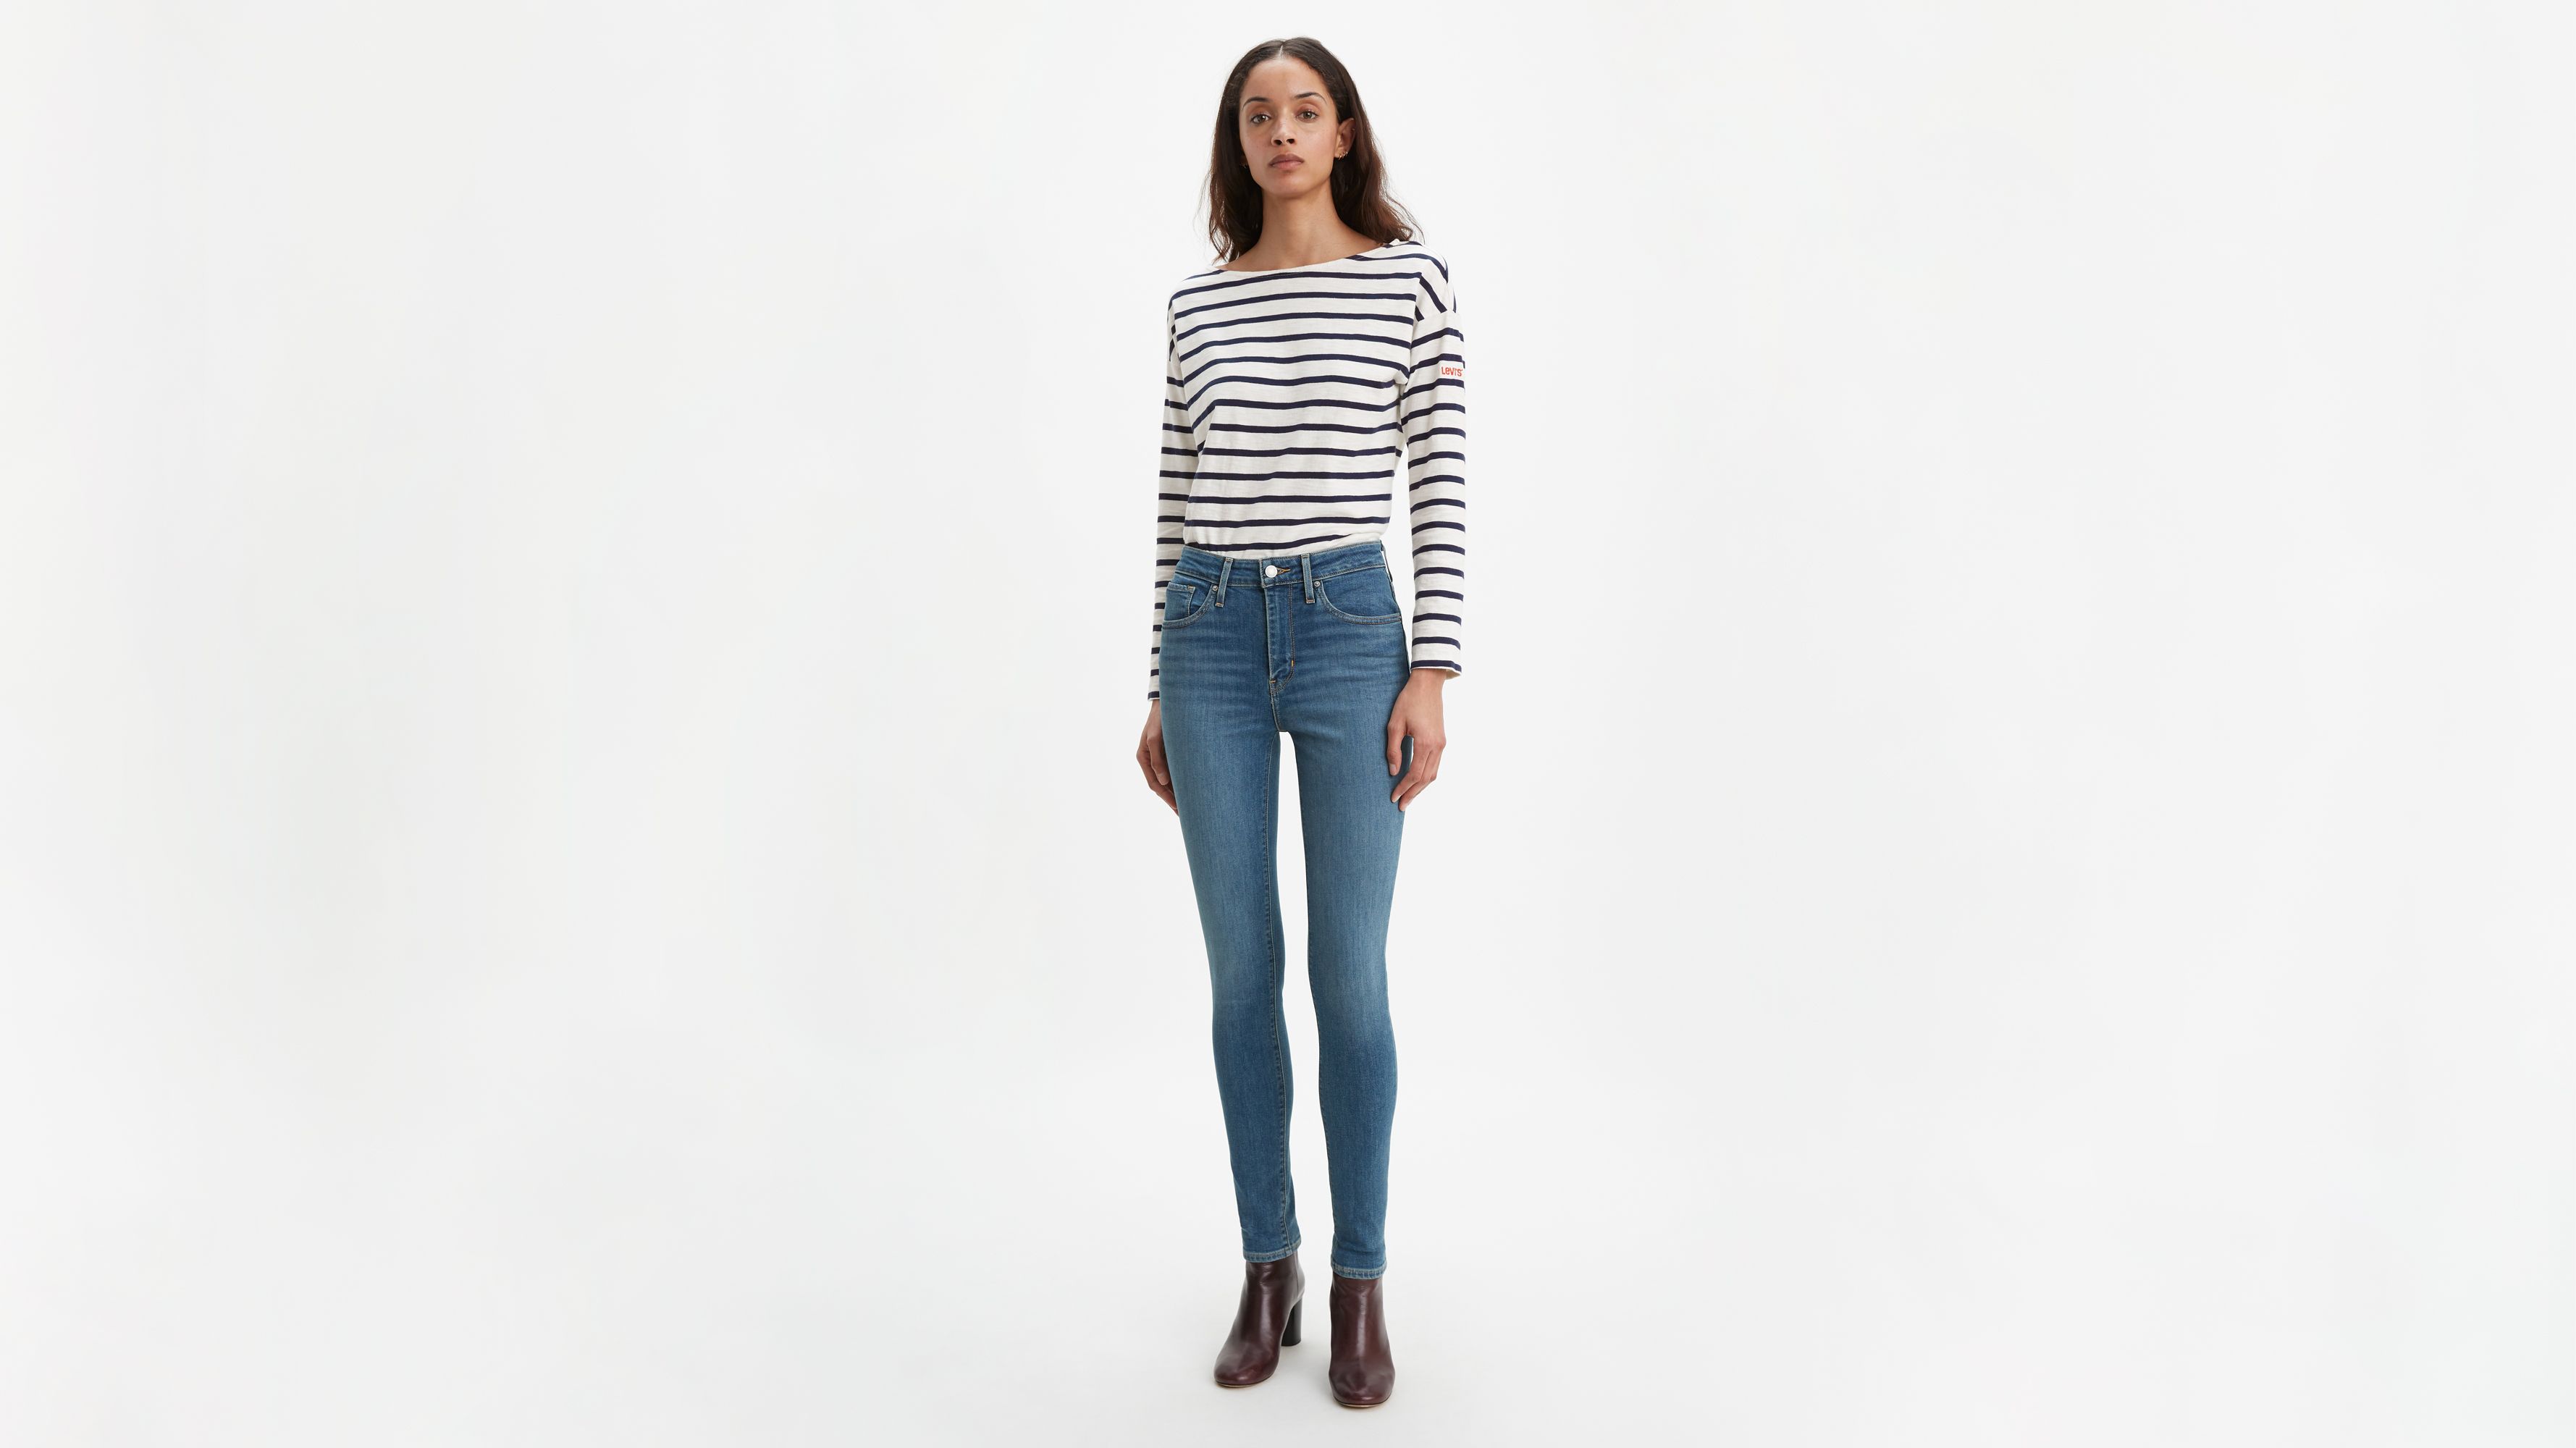 levi's 721 womens jeans